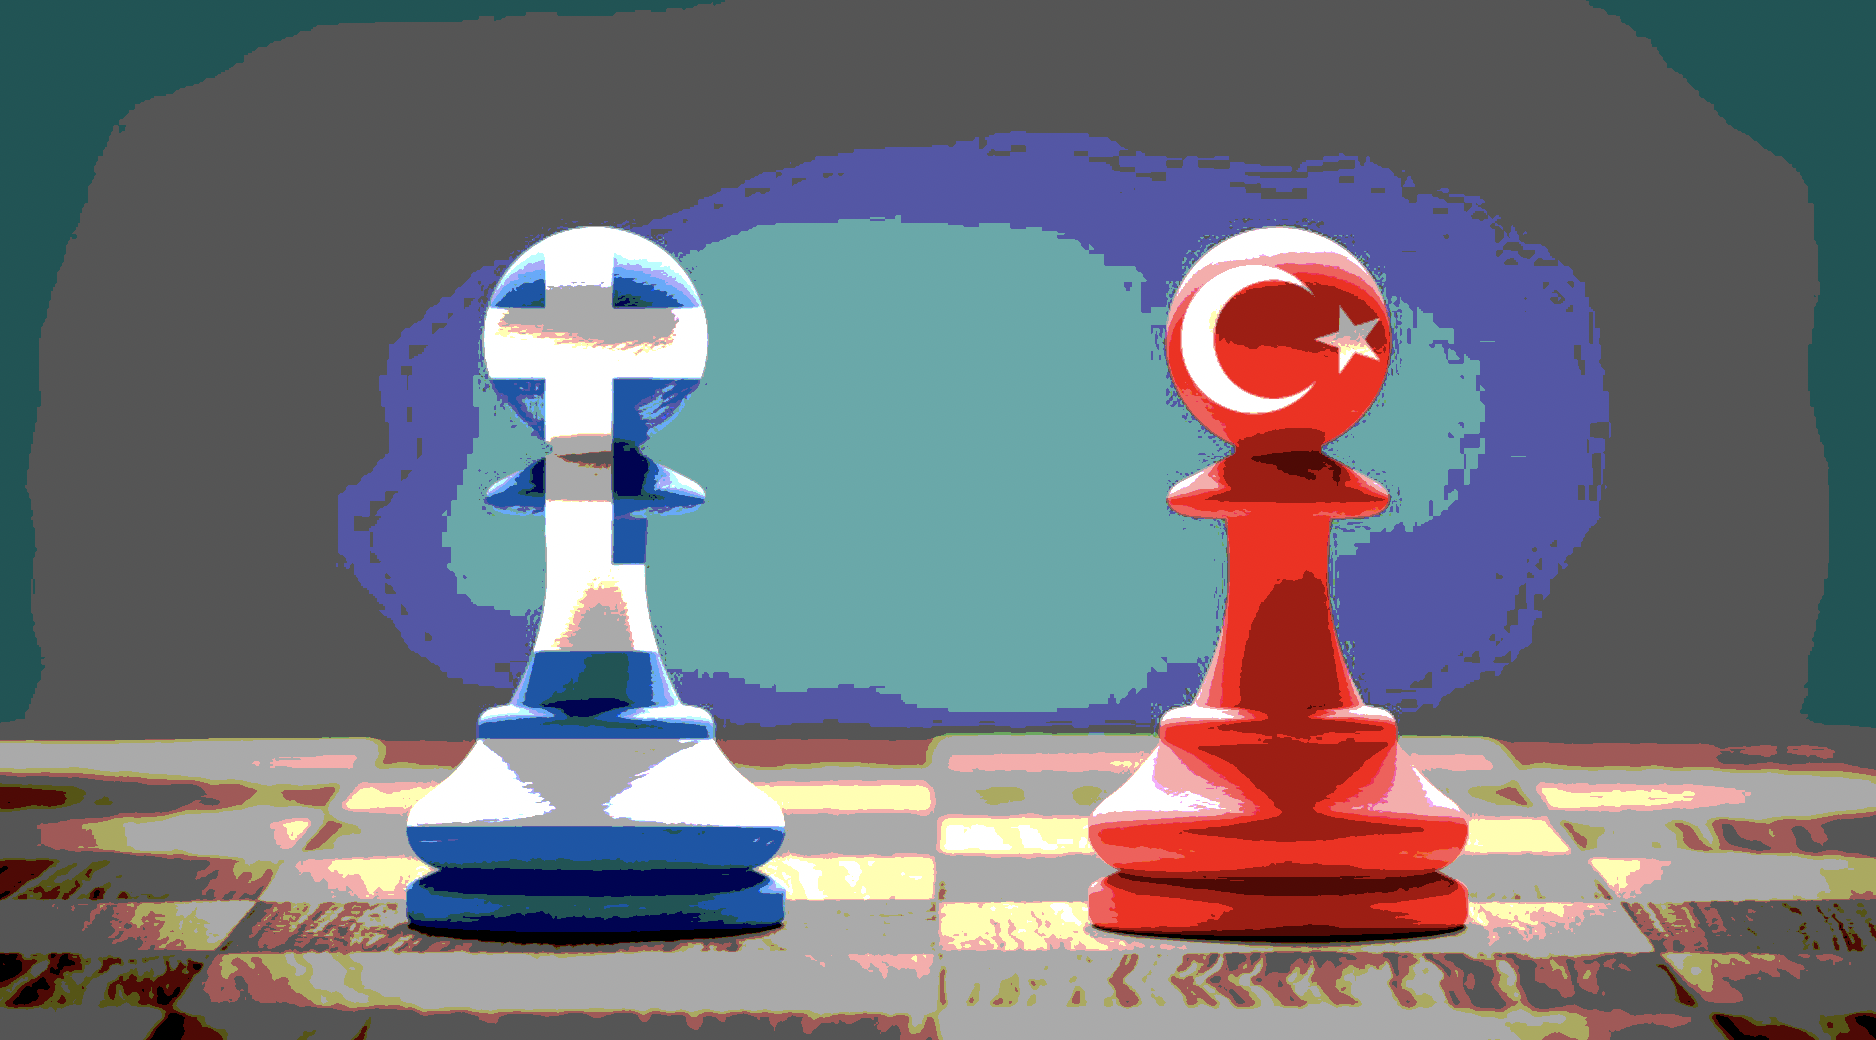  Yπάρχει Στρατηγική διαλόγου από την Ελλάδα ή απλά κάνουμε τα «κέφια» ΗΠΑ-ΝΑΤΟ-Τουρκίας;